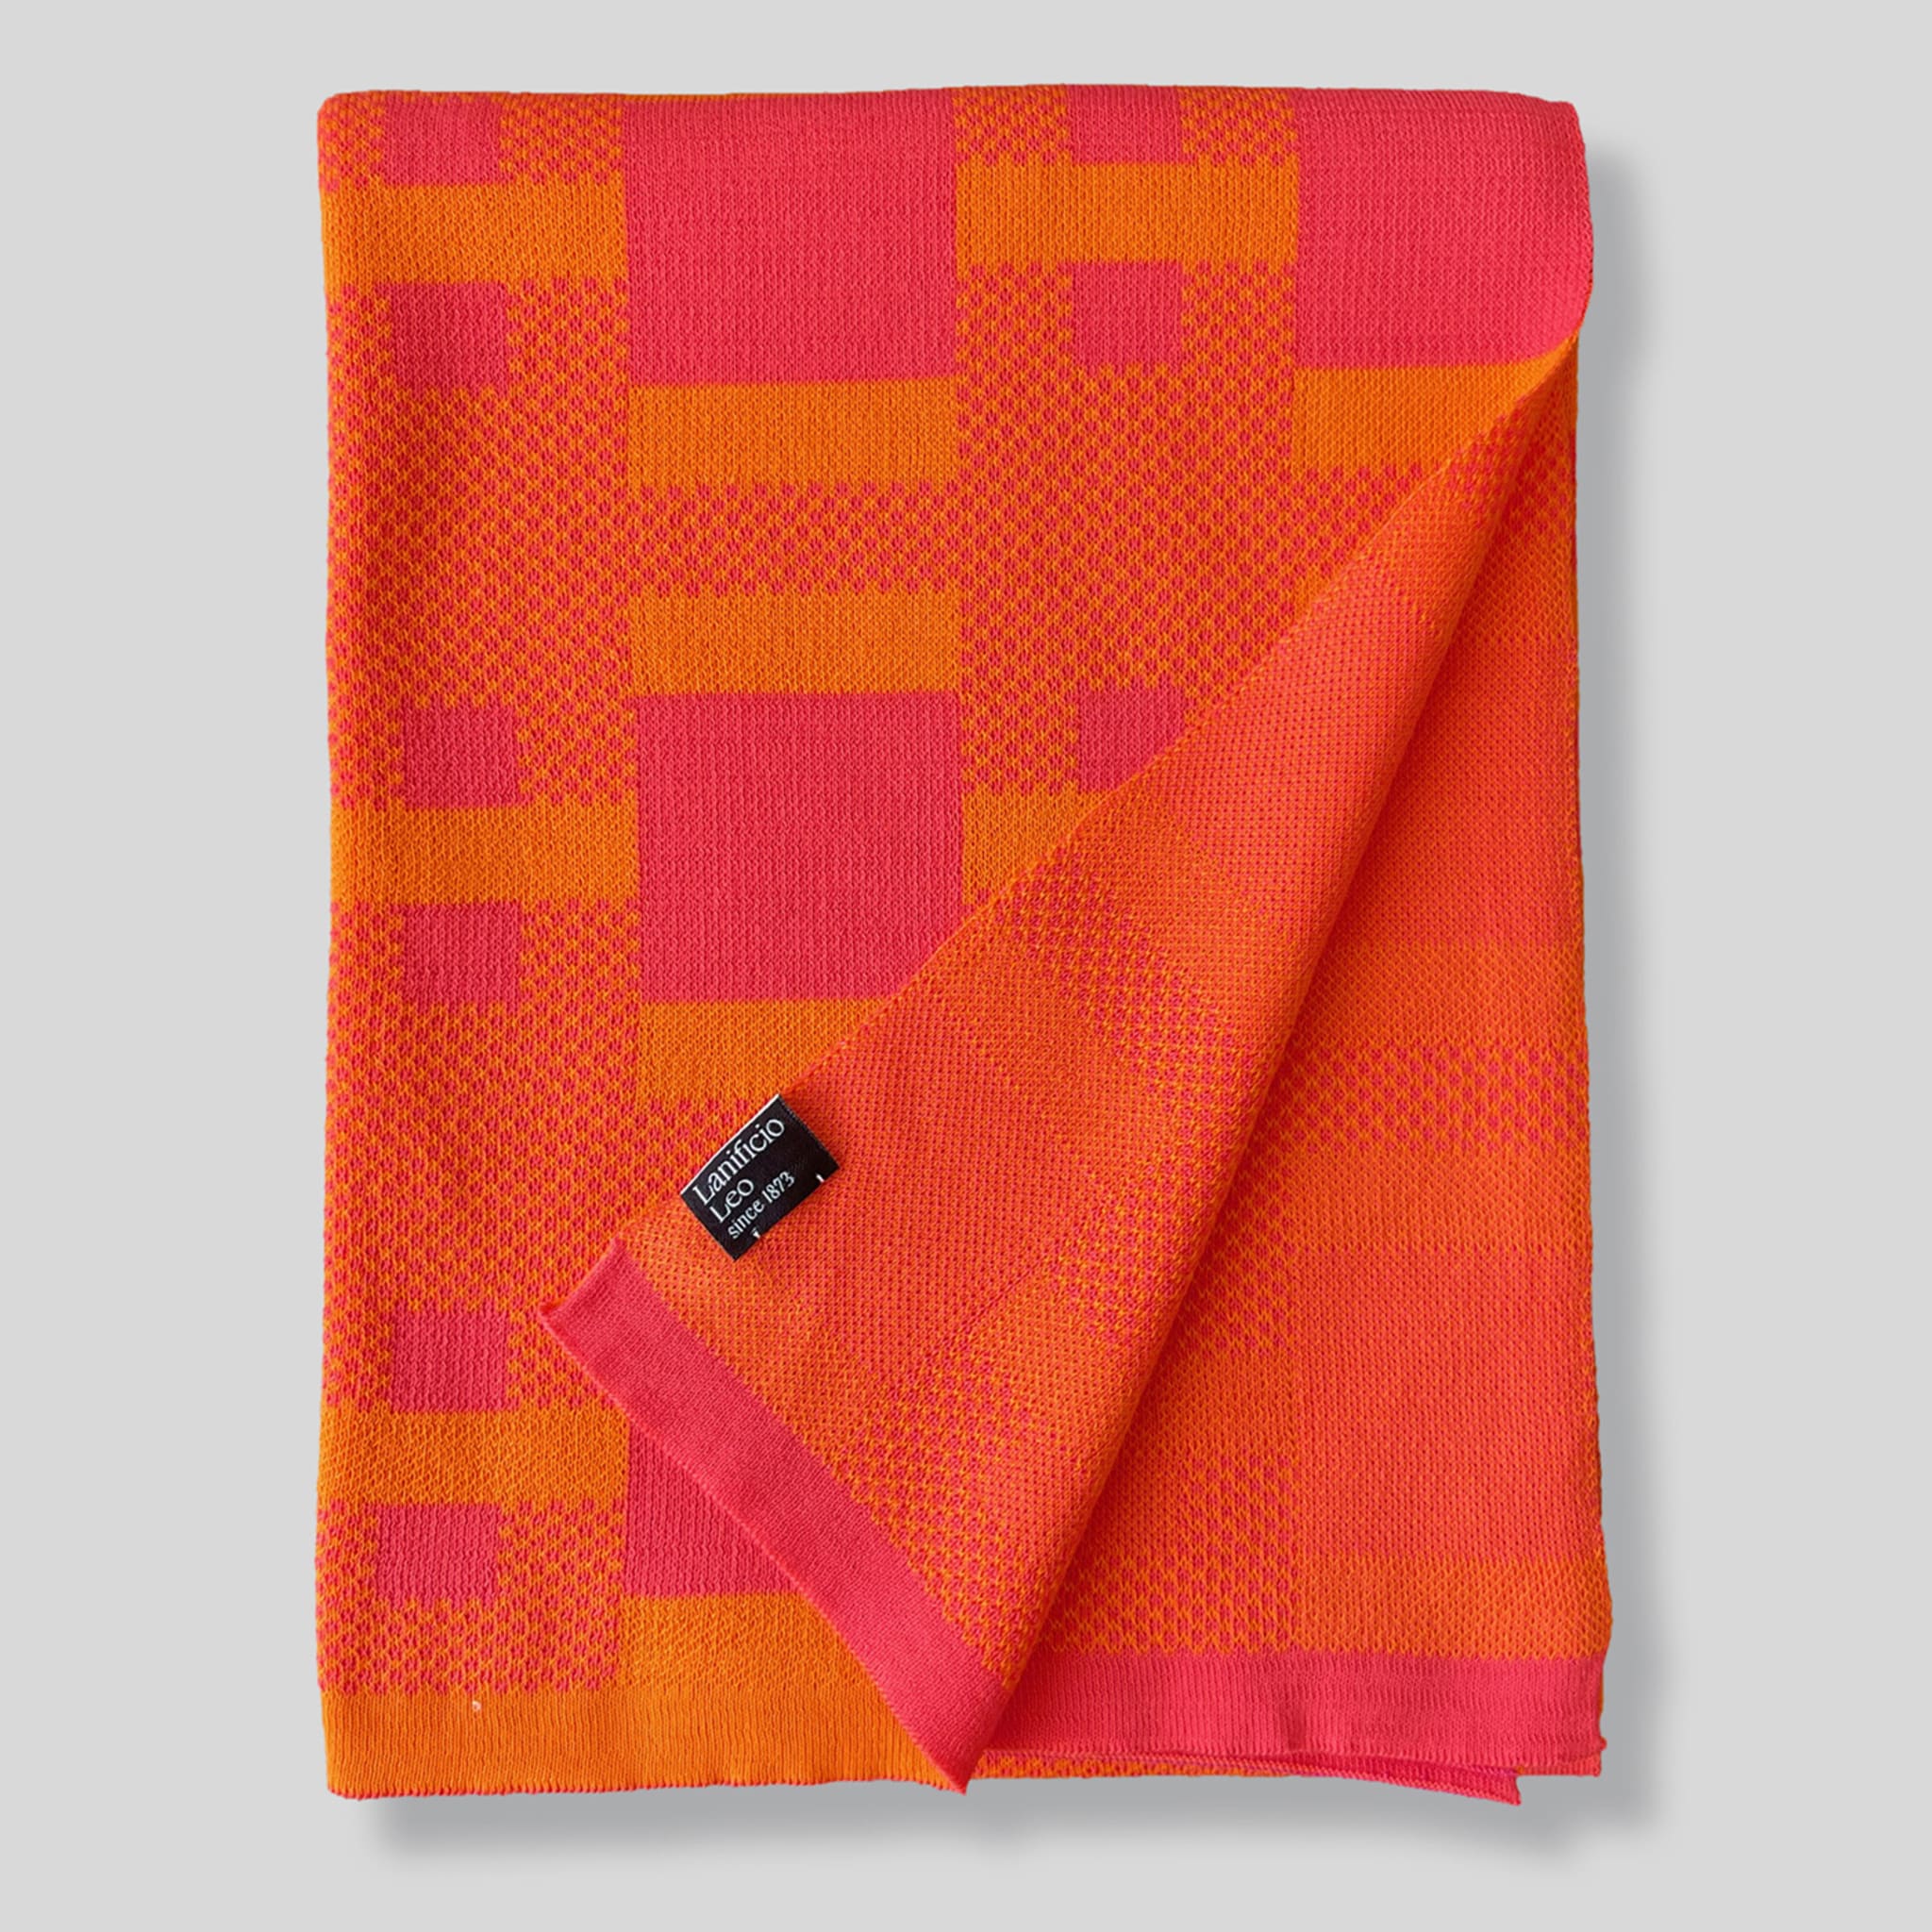 Plusminus Bio Orange Blanket by Angela Lorenz - Alternative view 2